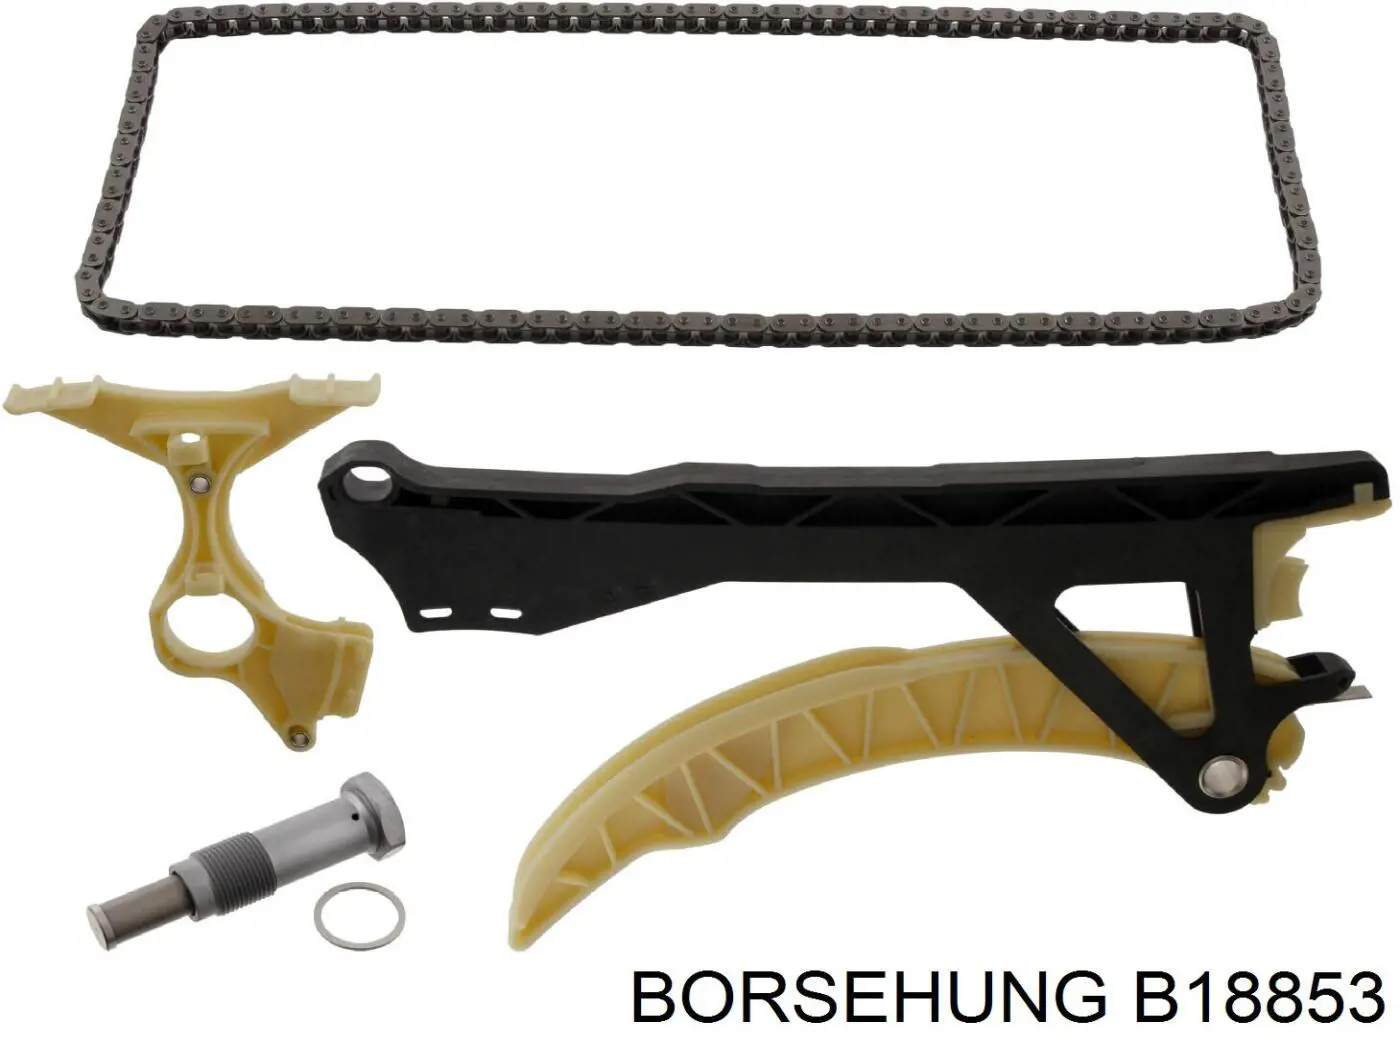 B18853 Borsehung комплект цепи грм